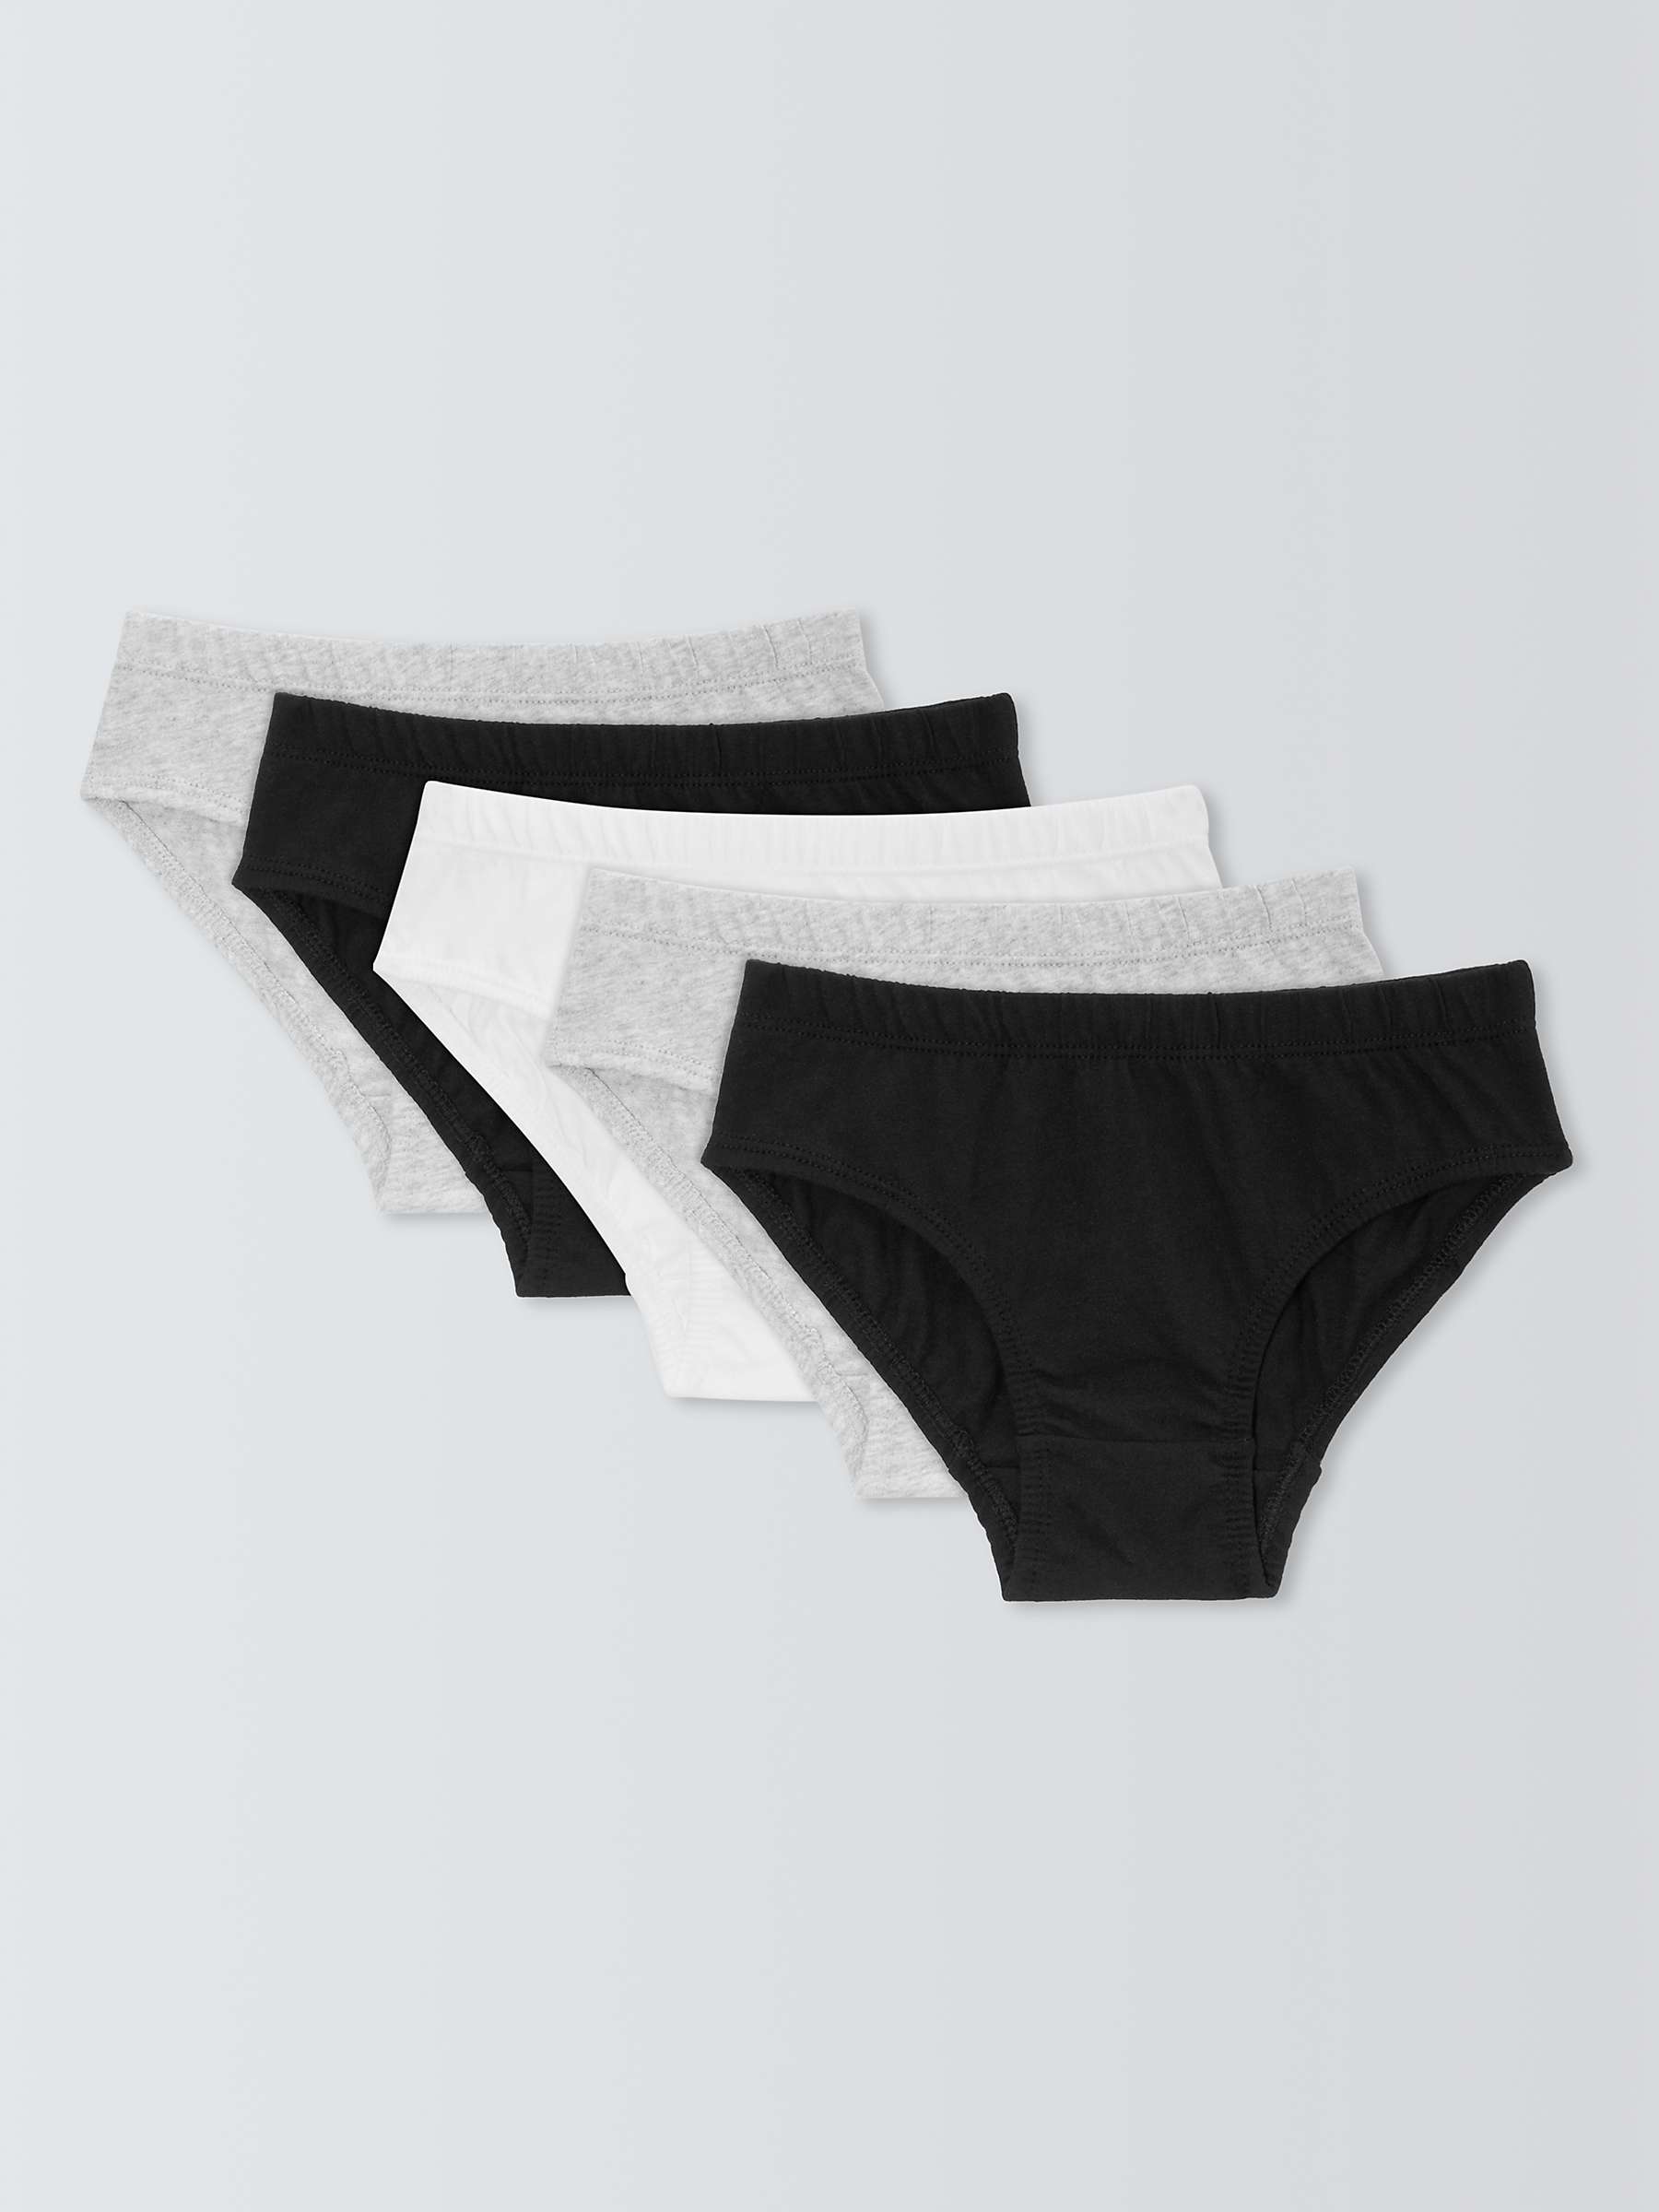 Buy John Lewis Kids' Pants, Pack of 5, Black/White/Grey Online at johnlewis.com